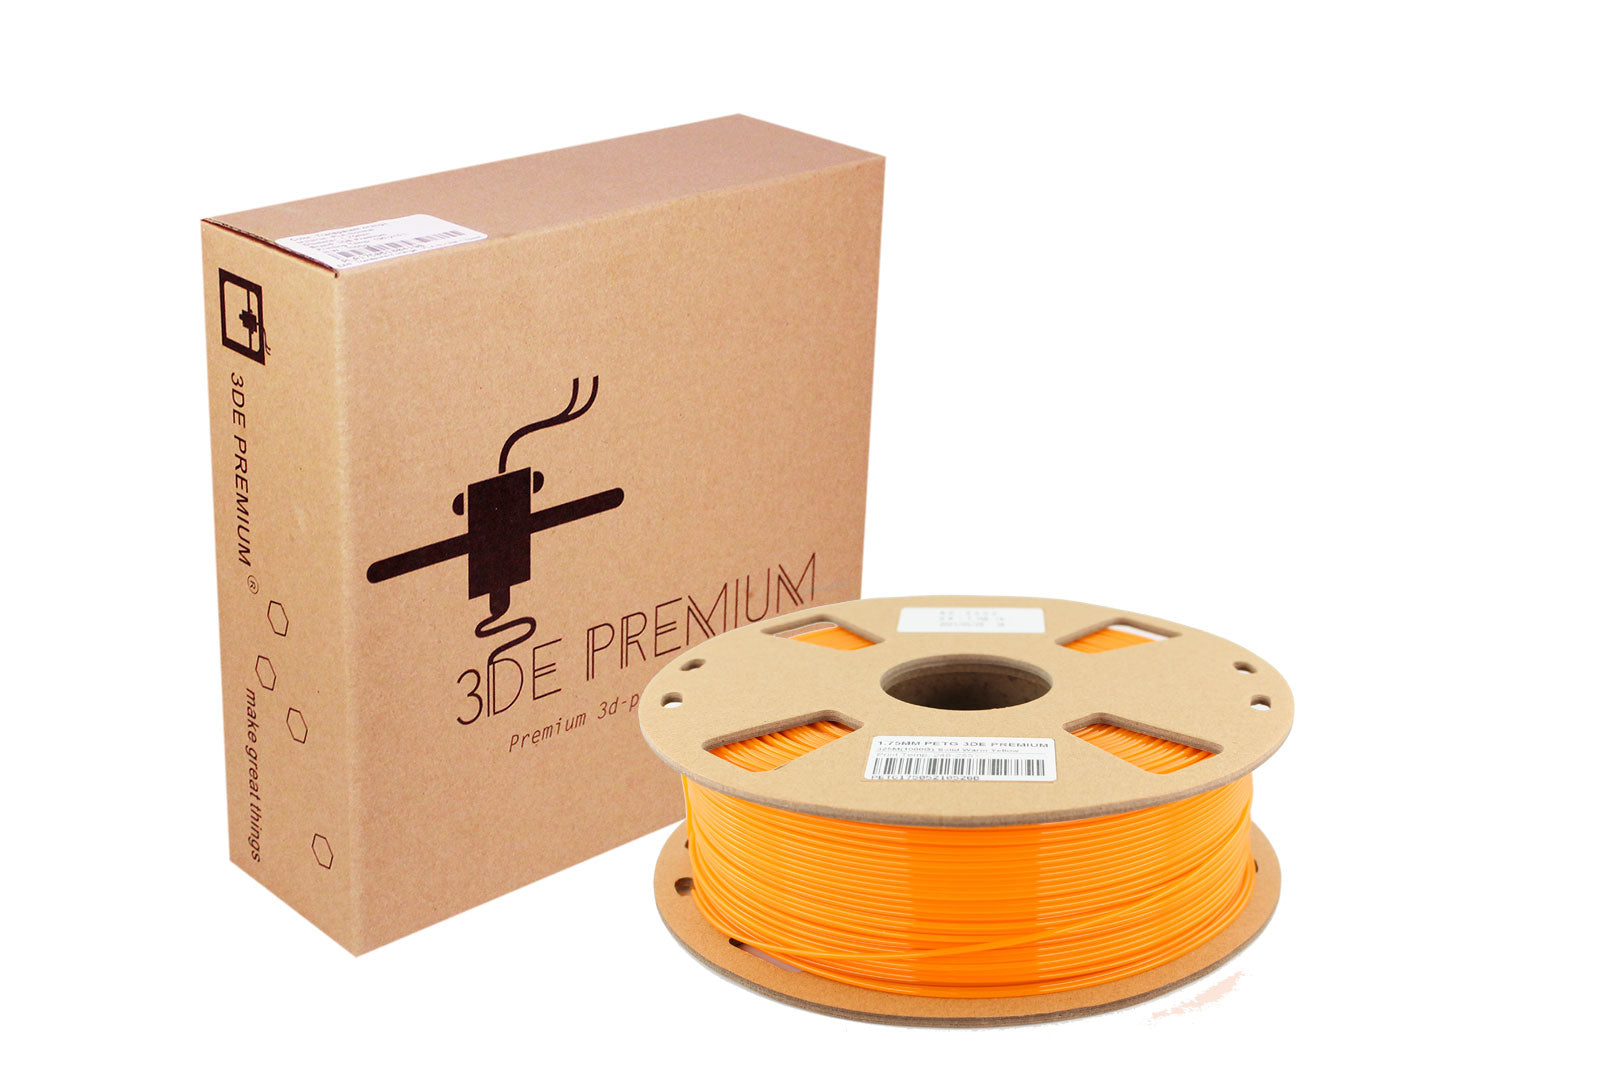 3DE Premium - PETG - Solid Warm Yellow - 1.75mm - 1kg (Limited Edition)